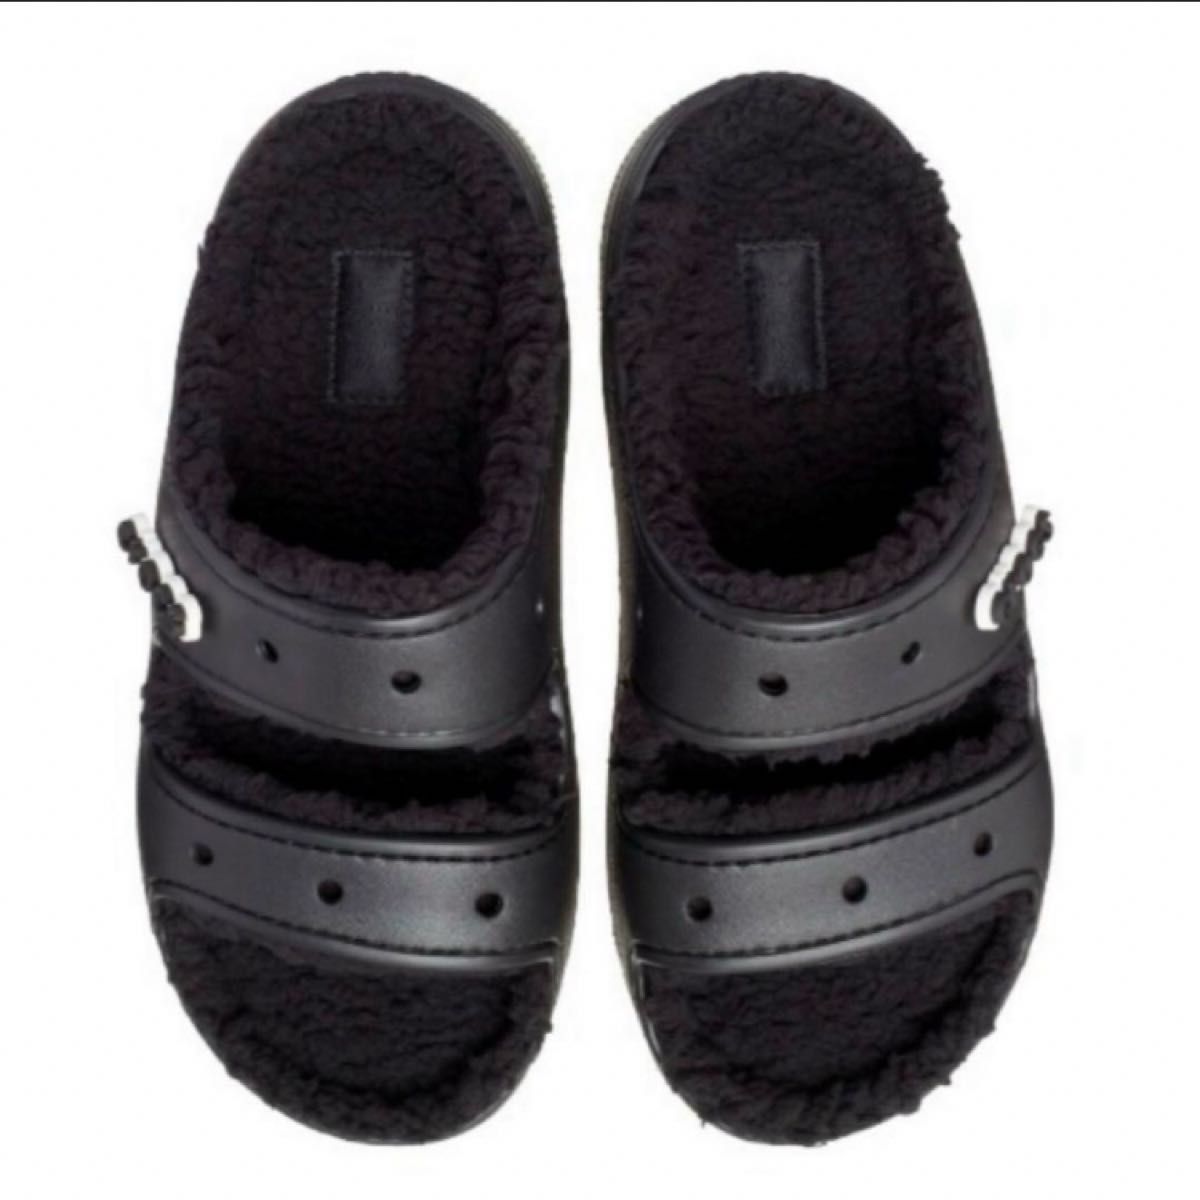 crocs Classic Cozzzy Sandal 24〜24.5㎝ ☆新品☆